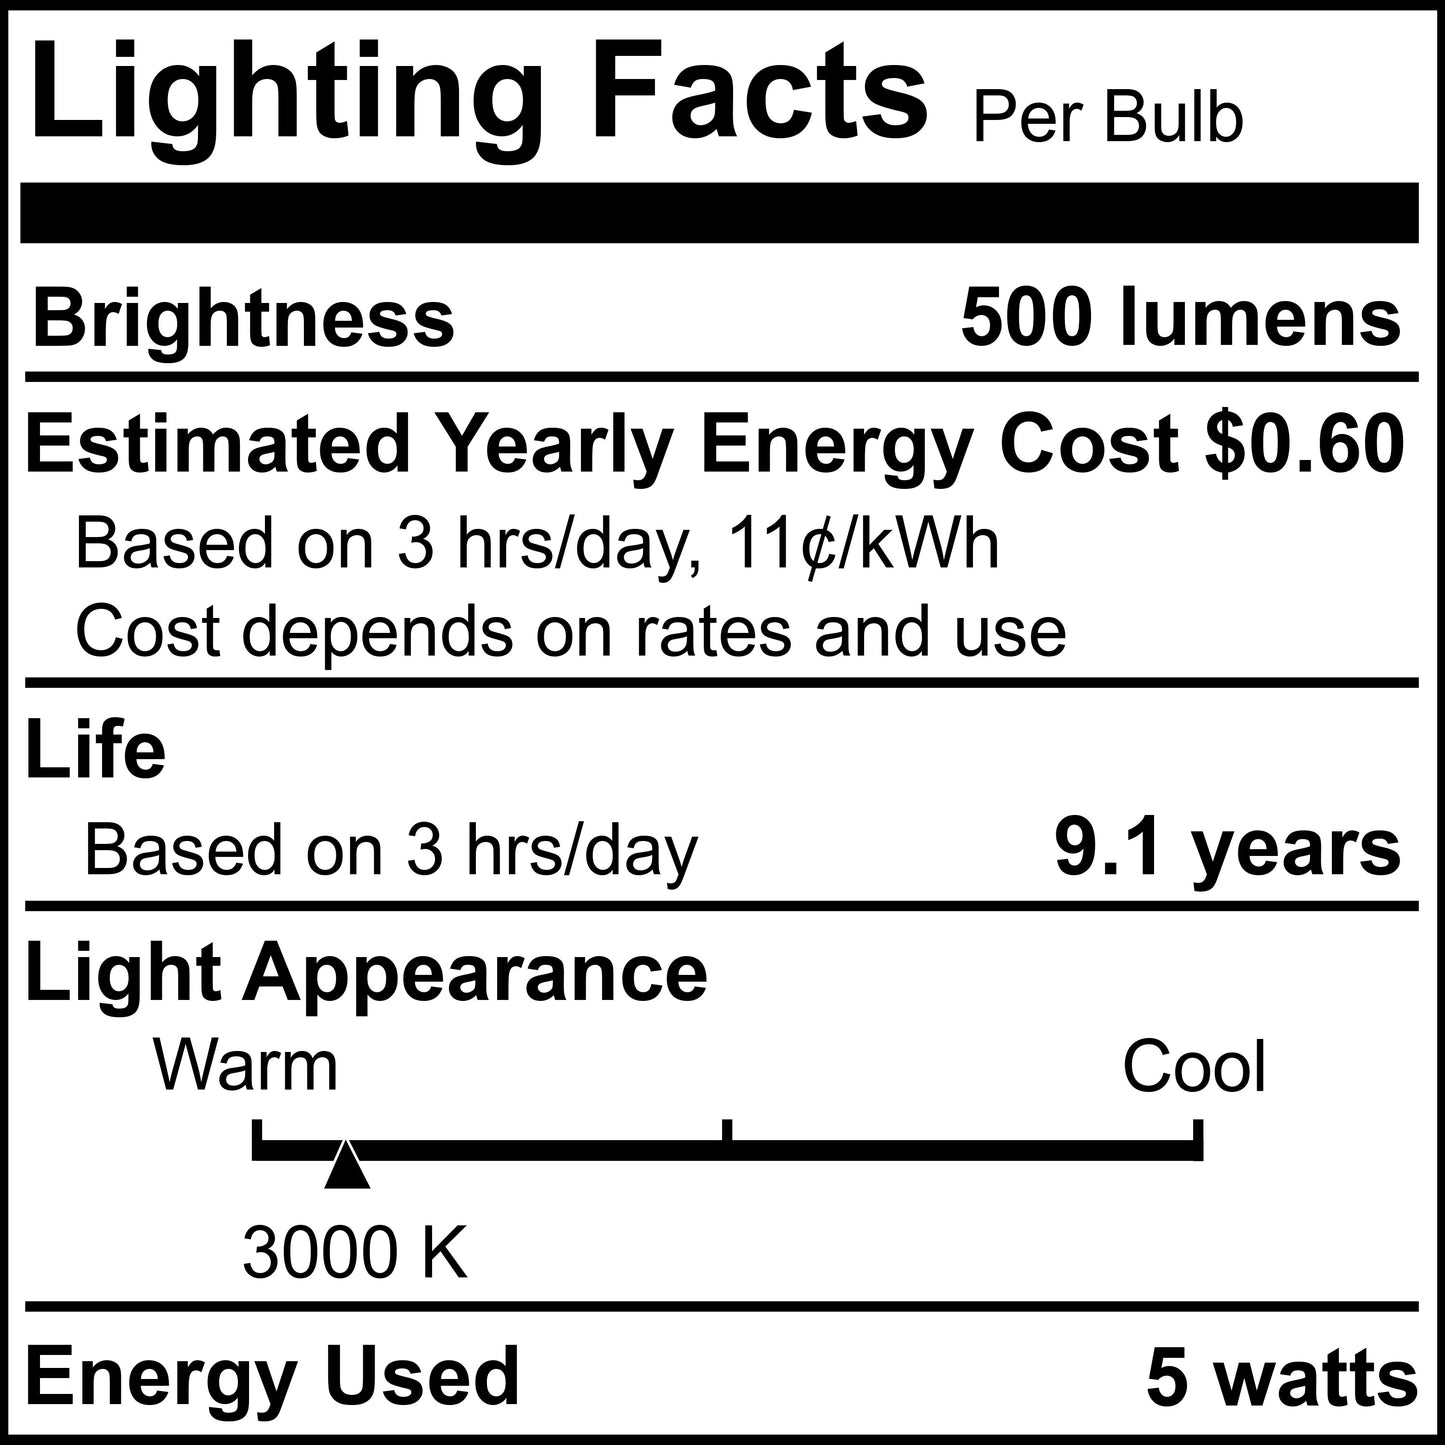 776637 - Filaments Dimmable Clear B11 Candelabra LED Light Bulb - 5 Watt - 3000K - 4 Pack